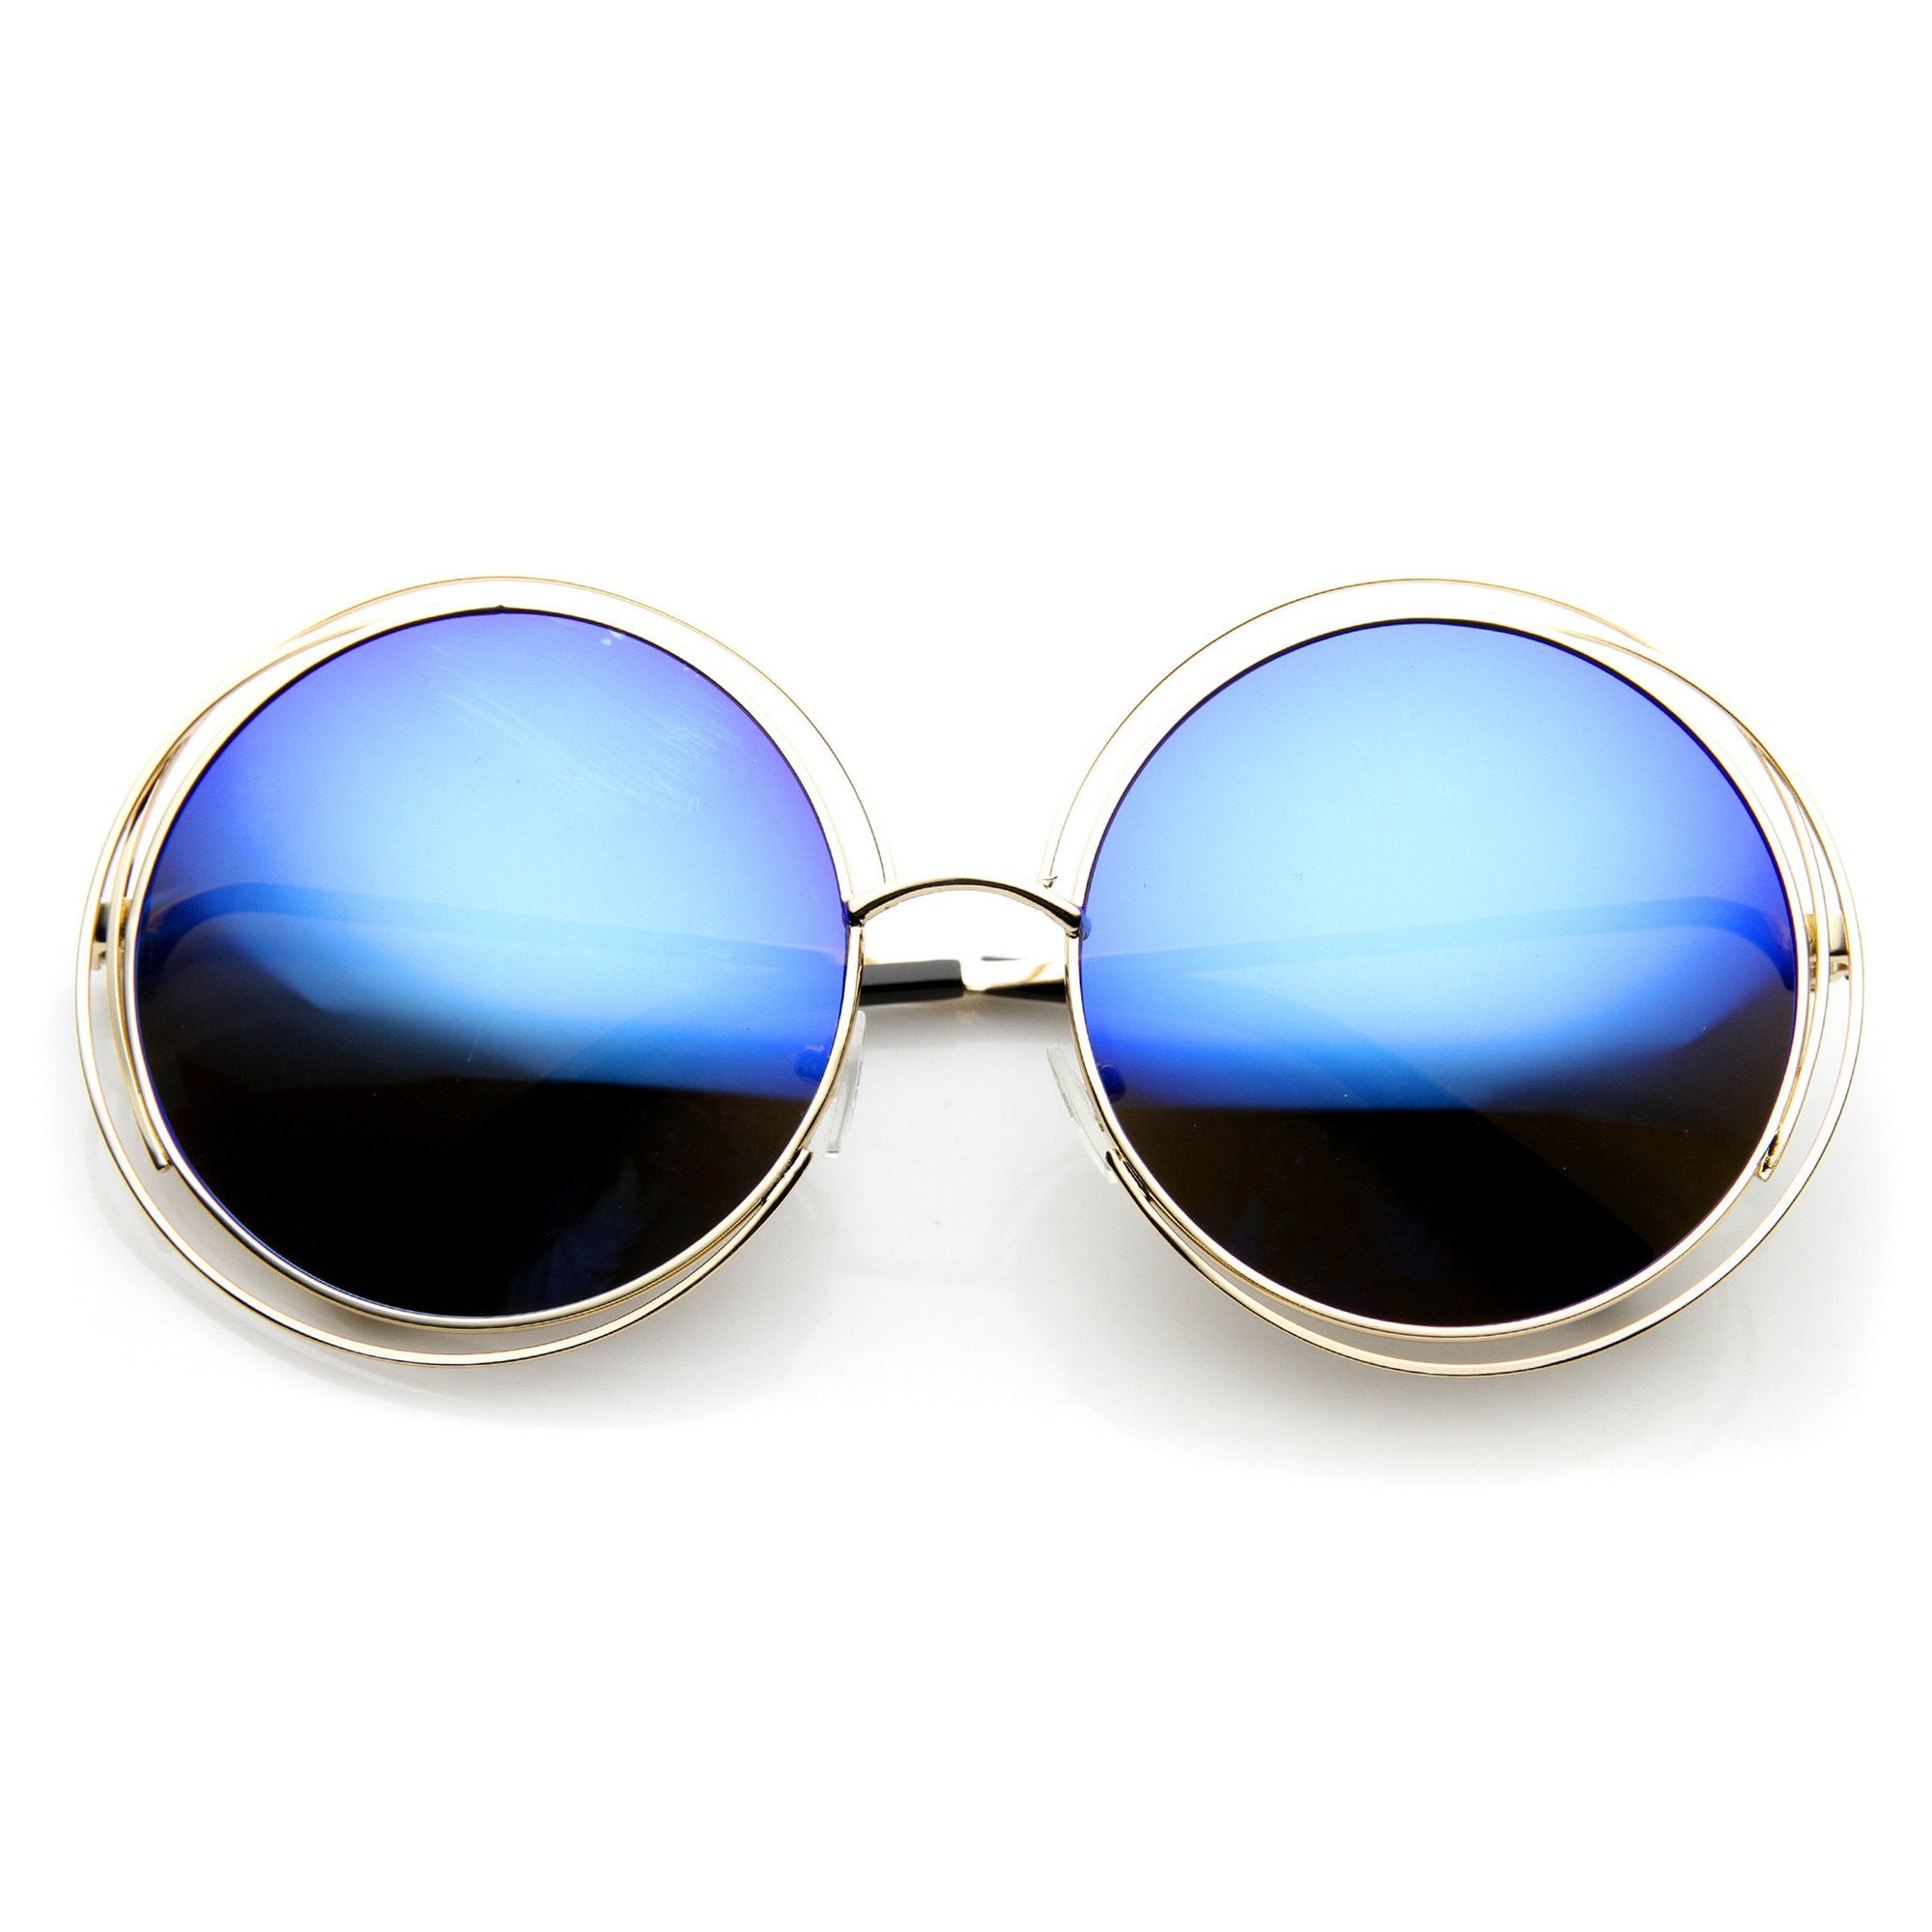 Cool Silver Sunglasses - Mirrored Sunglasses - Round Sunglasses - $15.00 -  Lulus